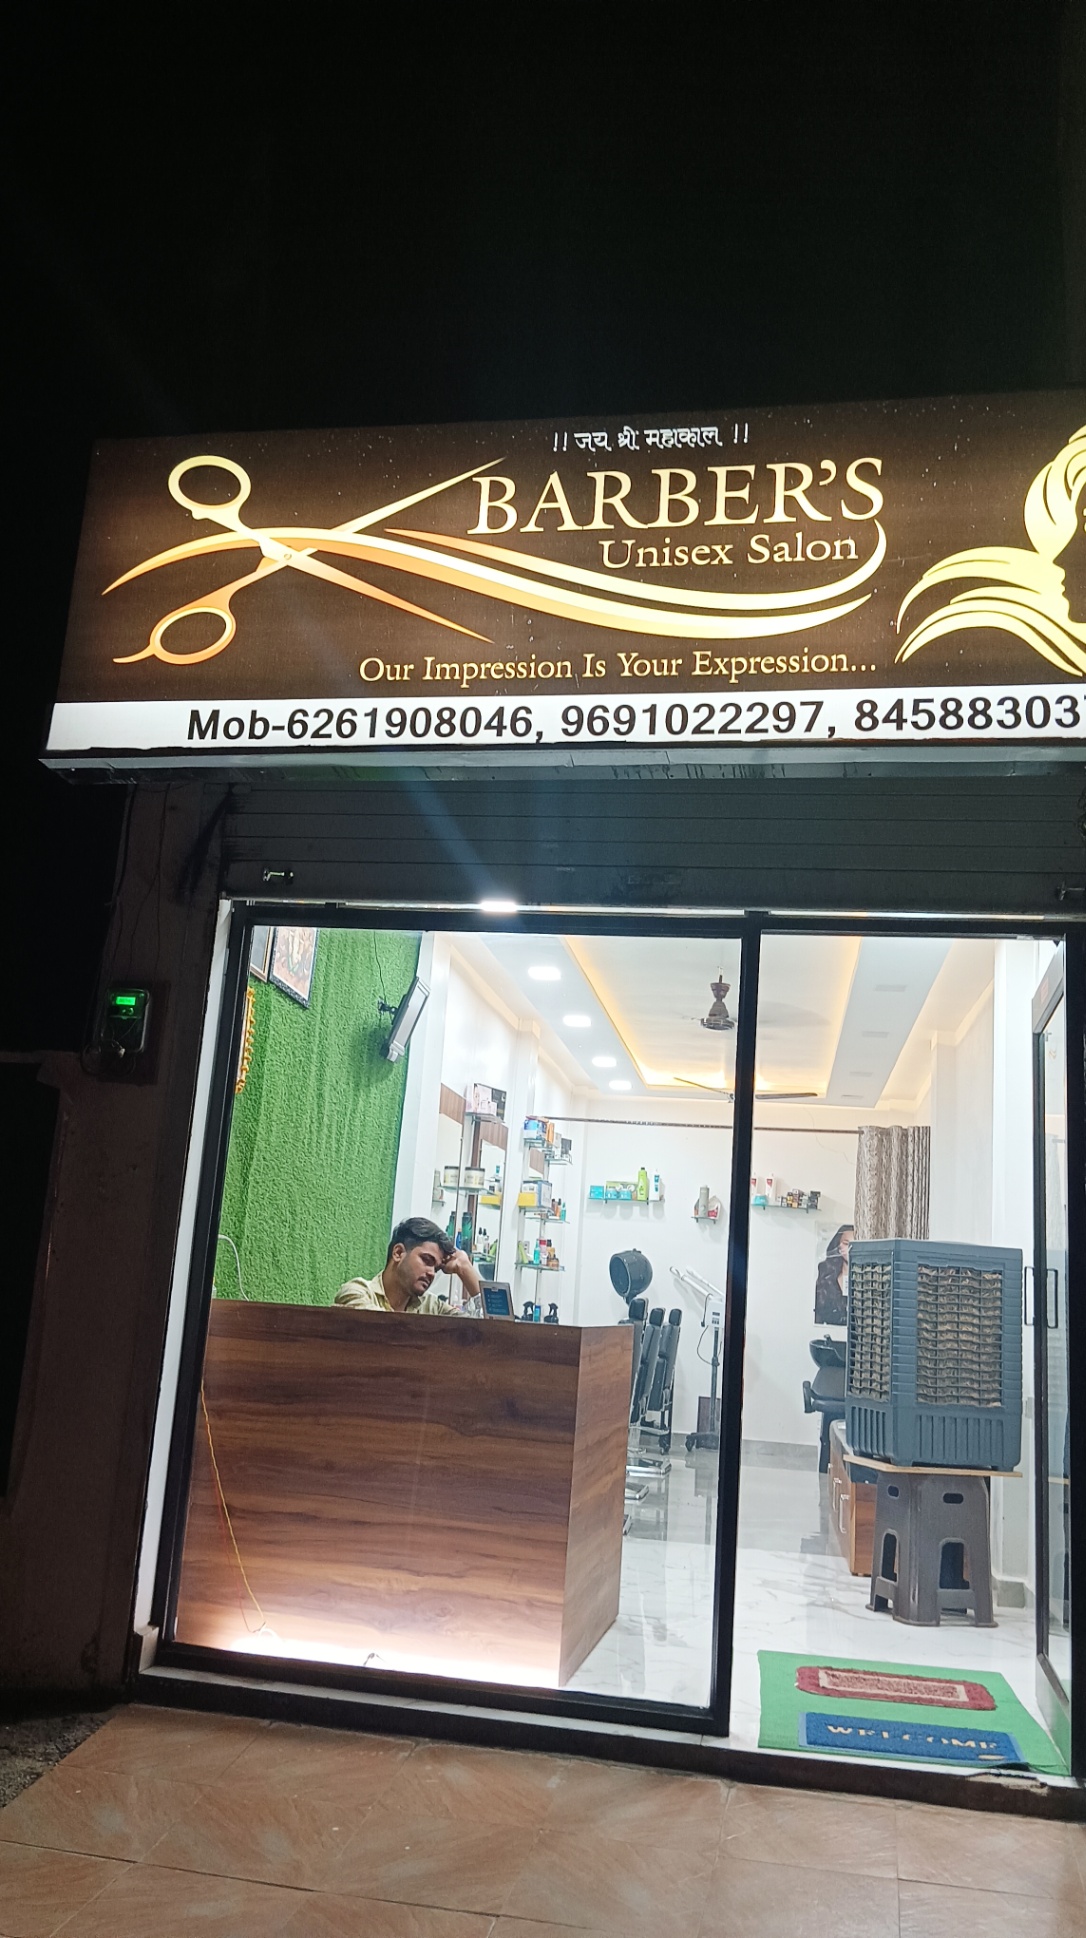 Barber's Unisex Salon